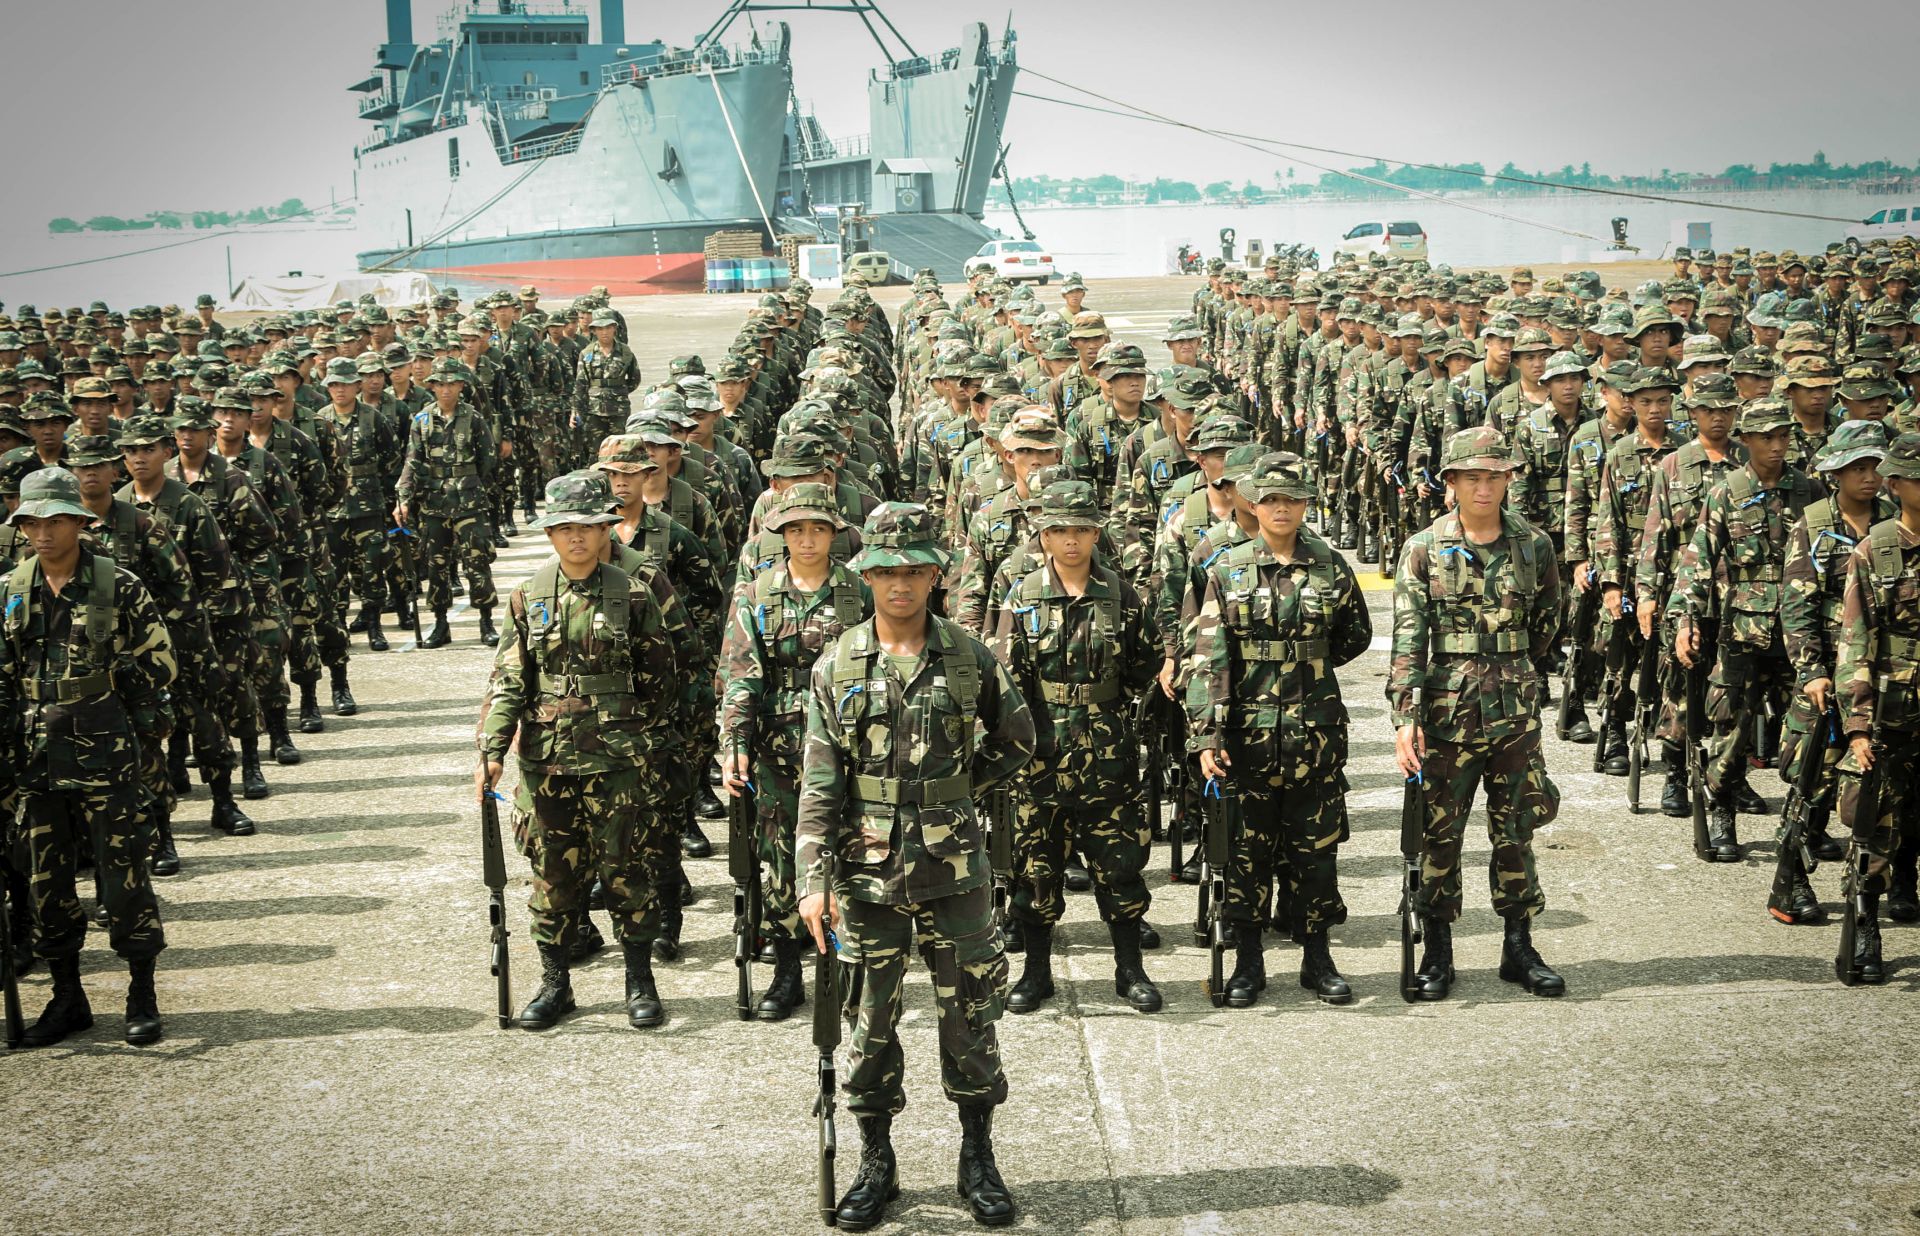 philippine army tanks list